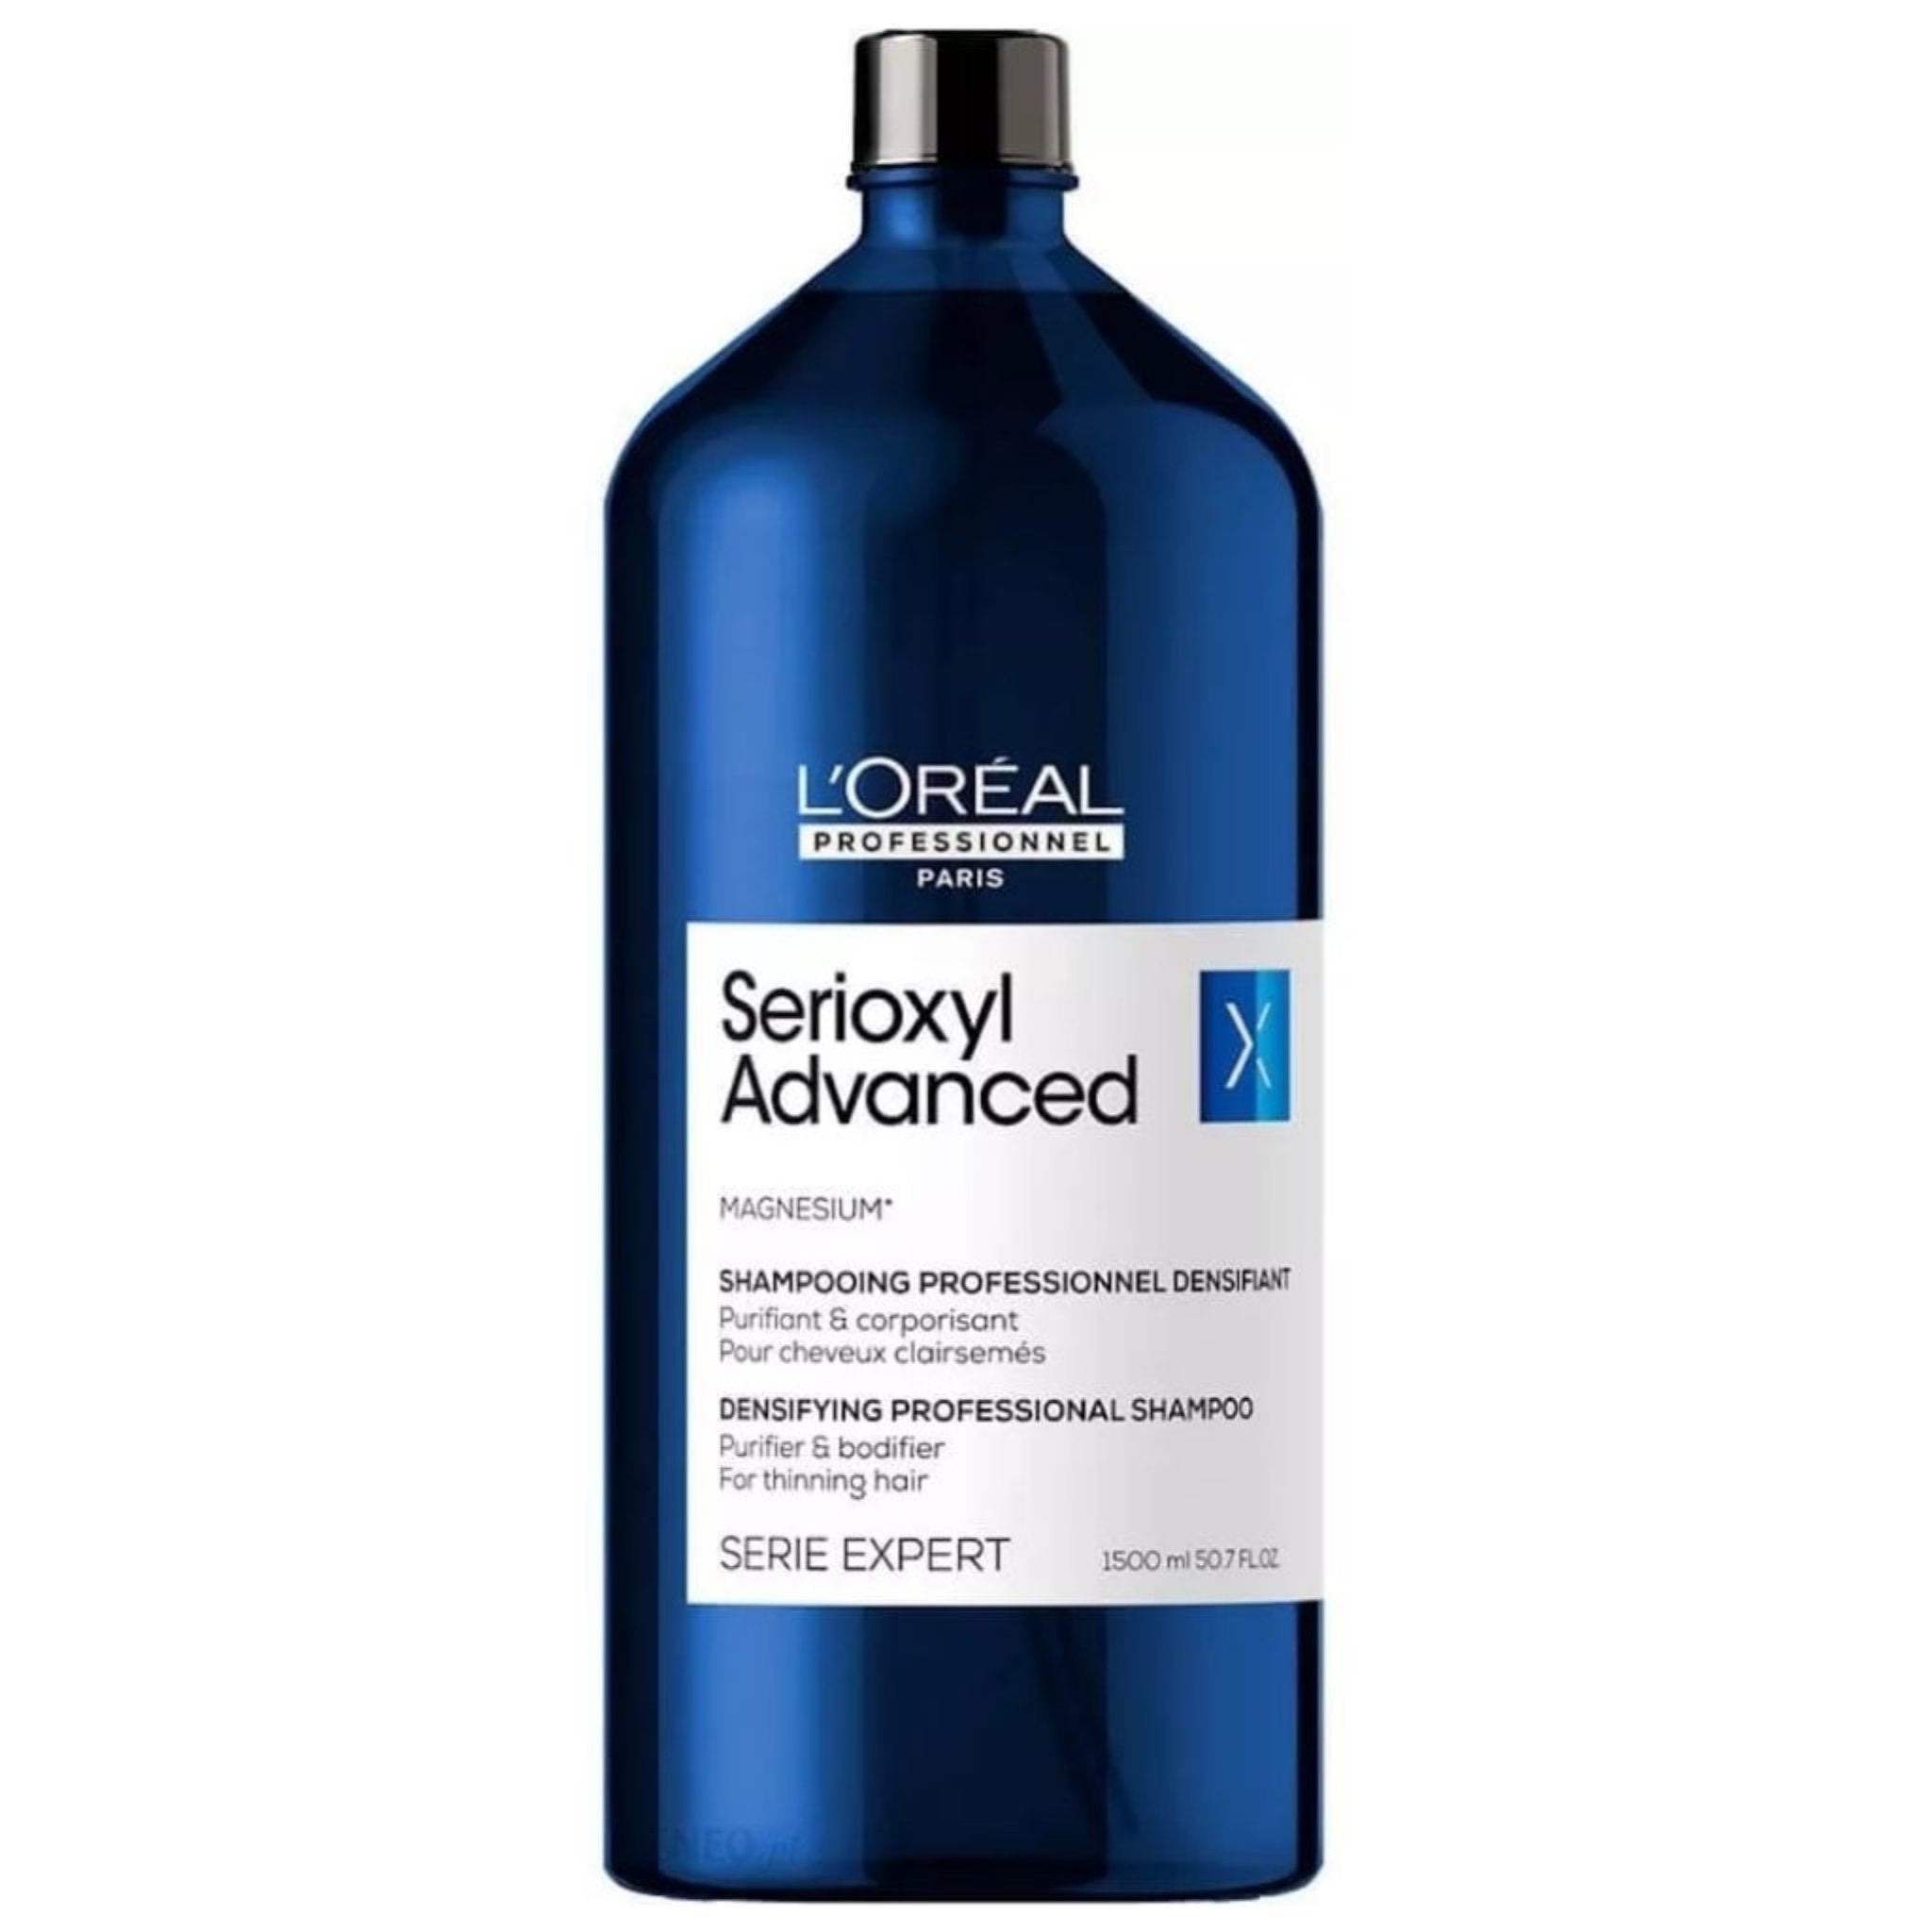 L'Oréal Serie Expert. Shampoing Serioxyl Advanced - 1500 ml - Concept C. Shop